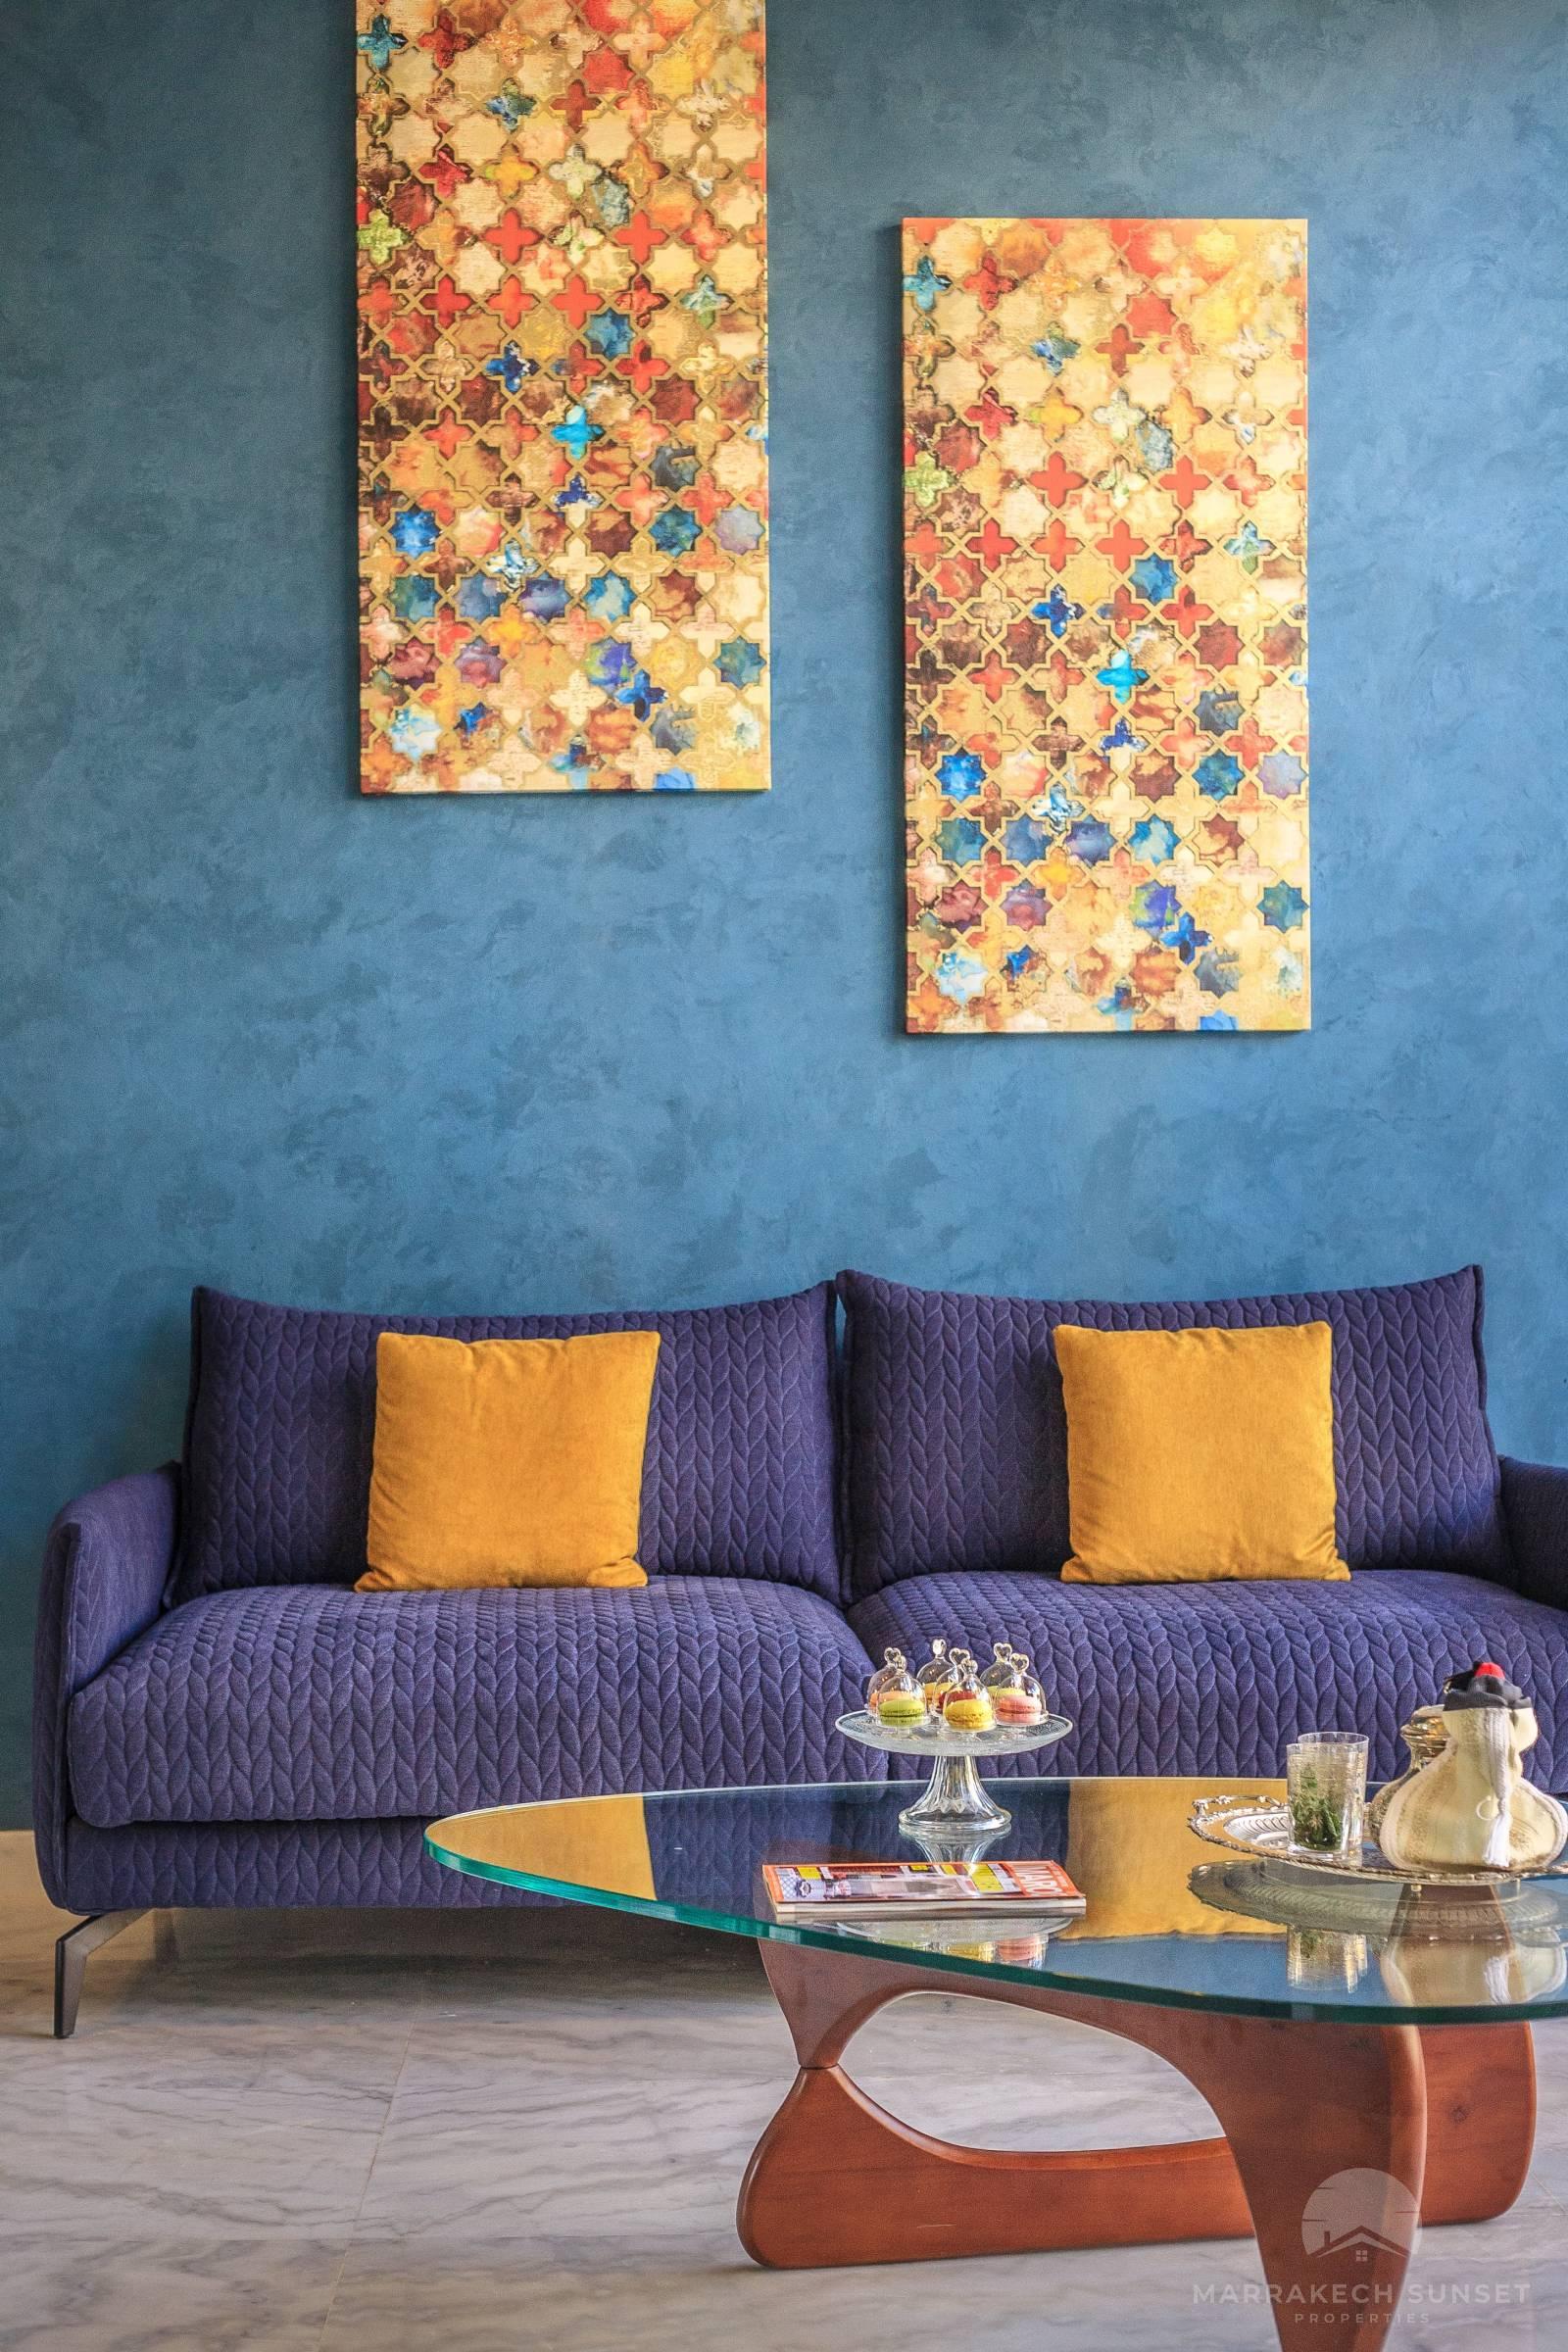  Luxury 2 bedroom Loft apartment for sale in Marrakech 